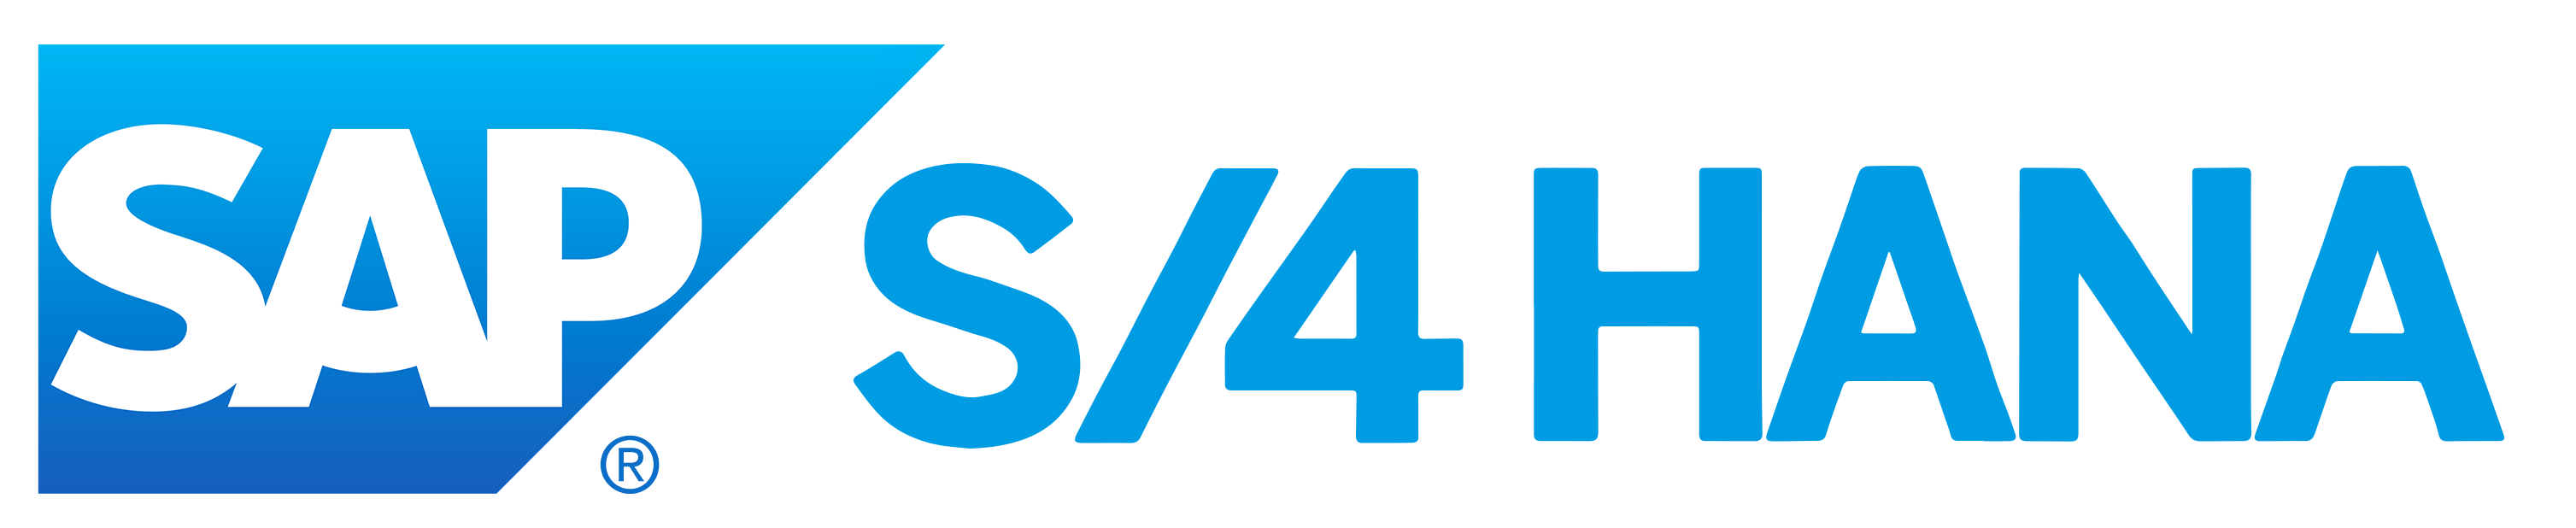 S4HANA Logo